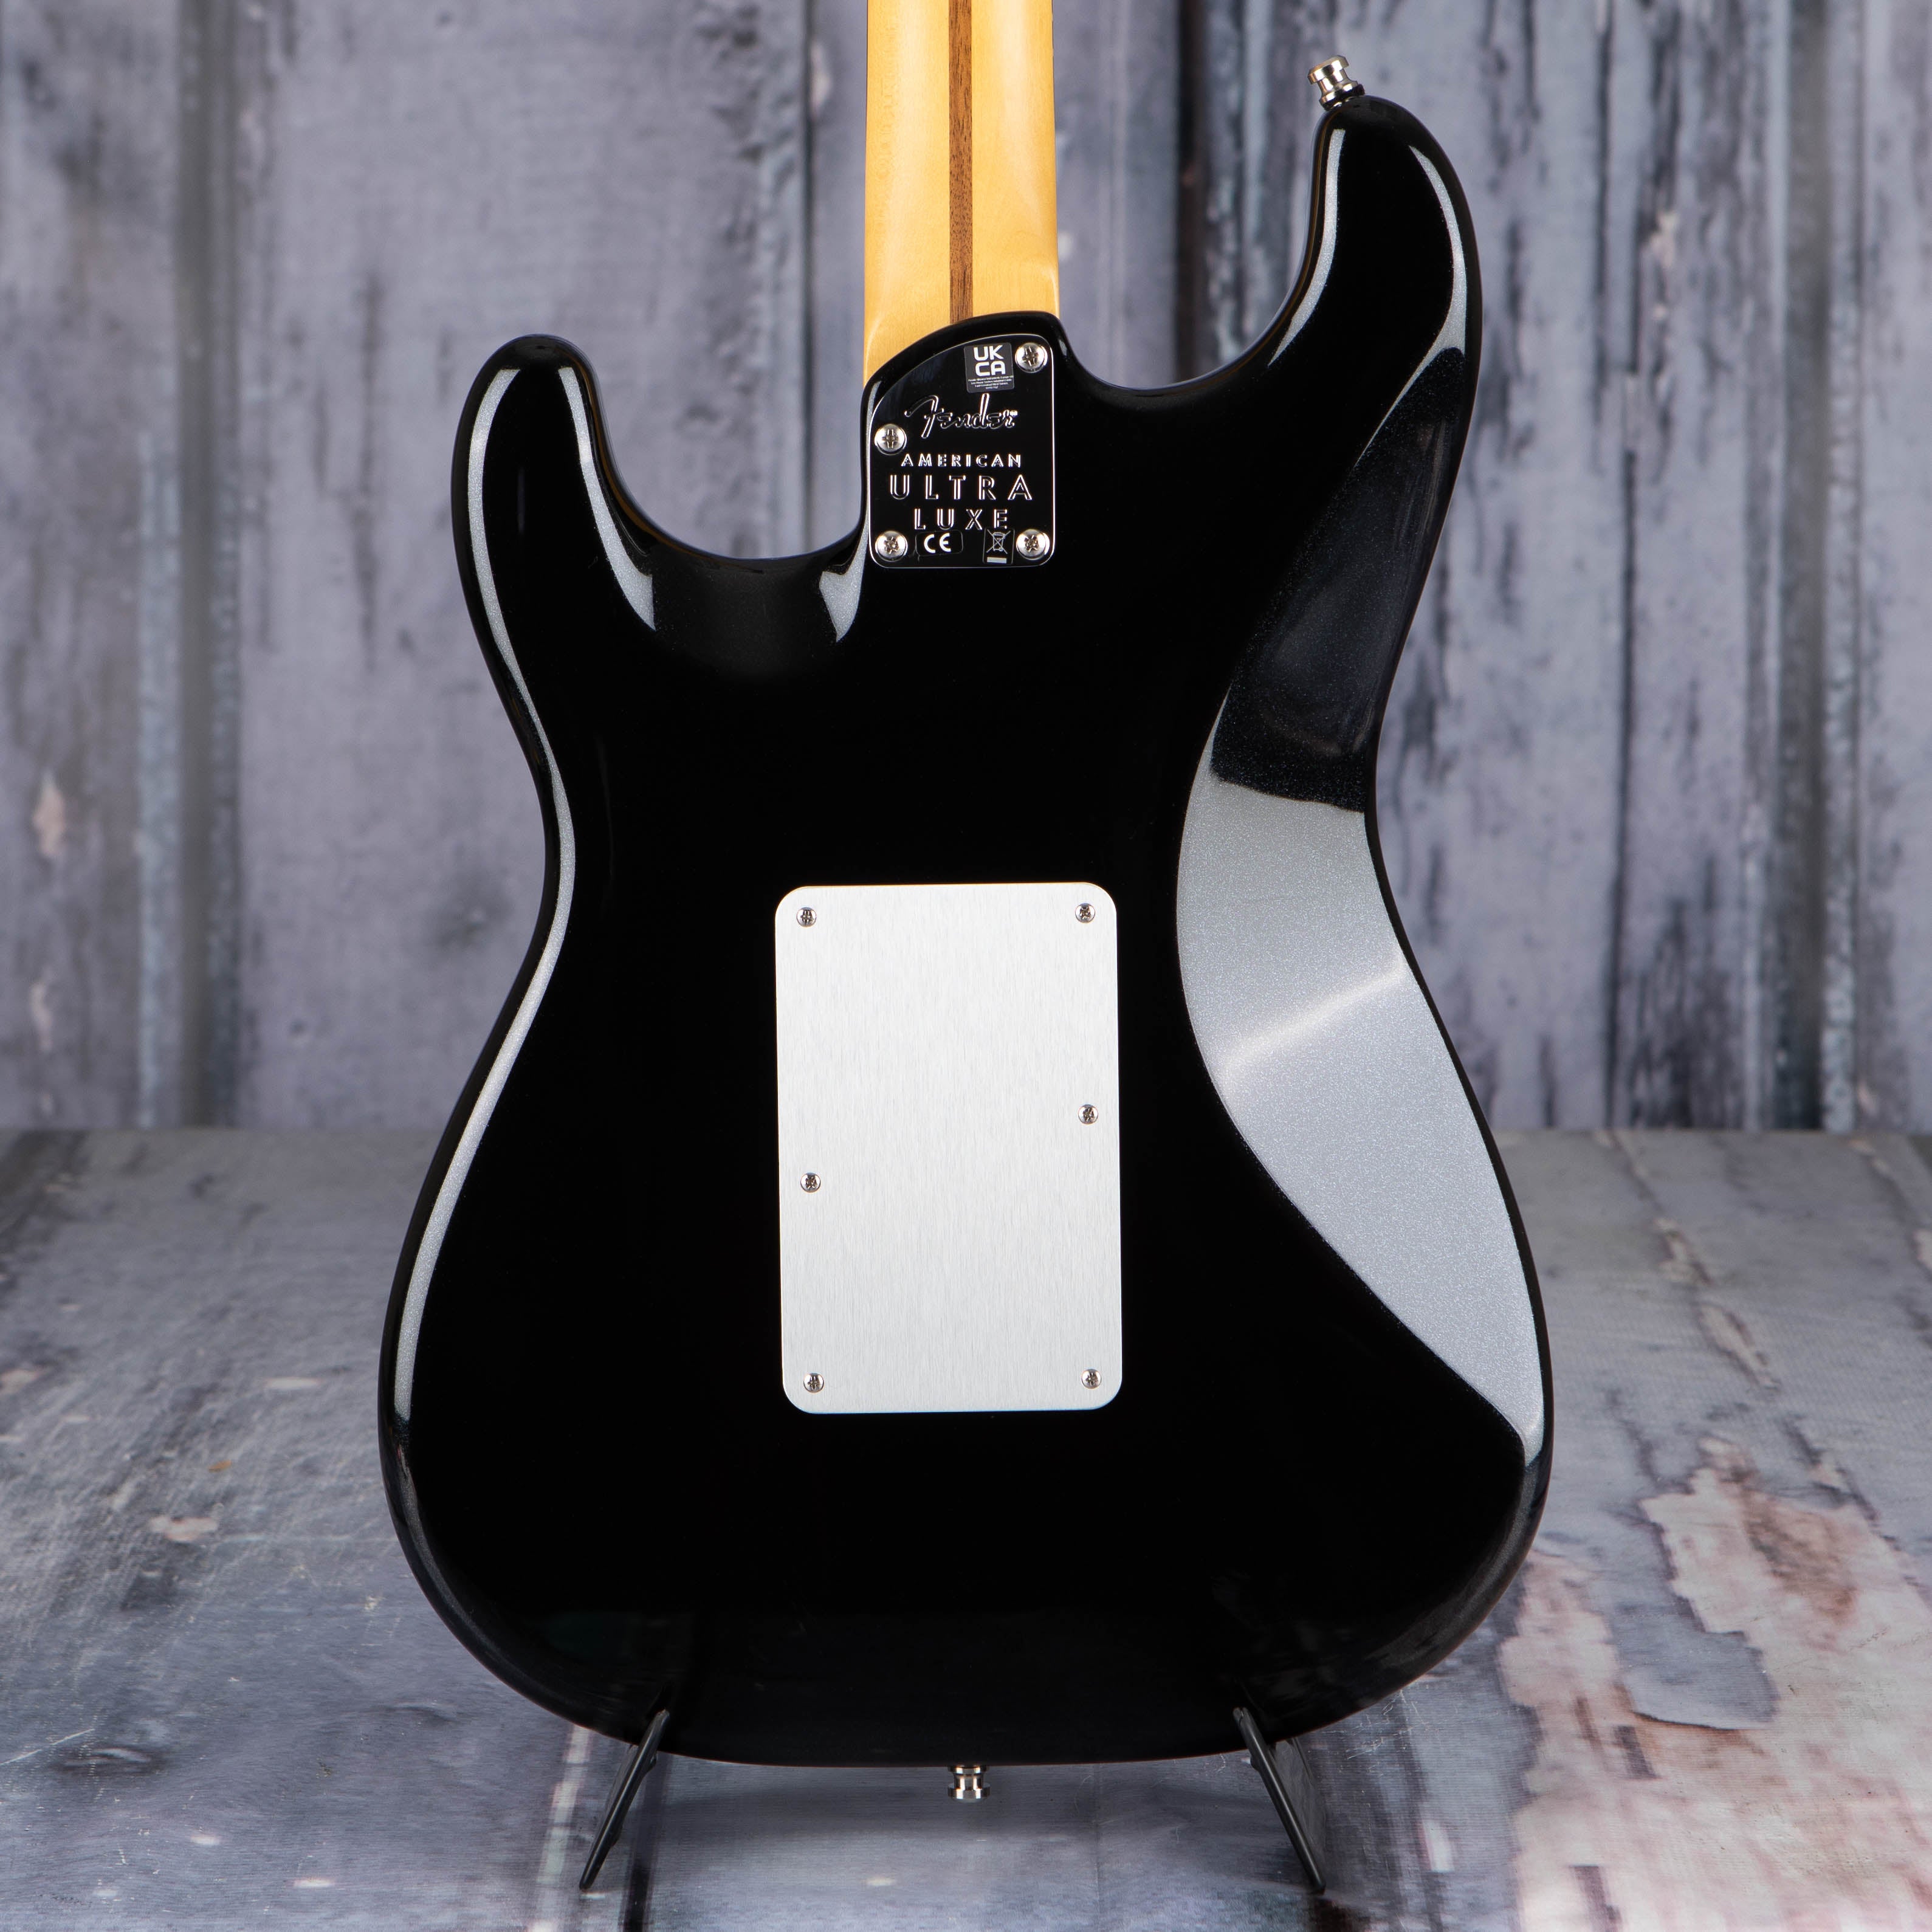 Fender American Ultra Luxe Stratocaster Floyd Rose HSS Electric Guitar, Mystic Black, back closeup